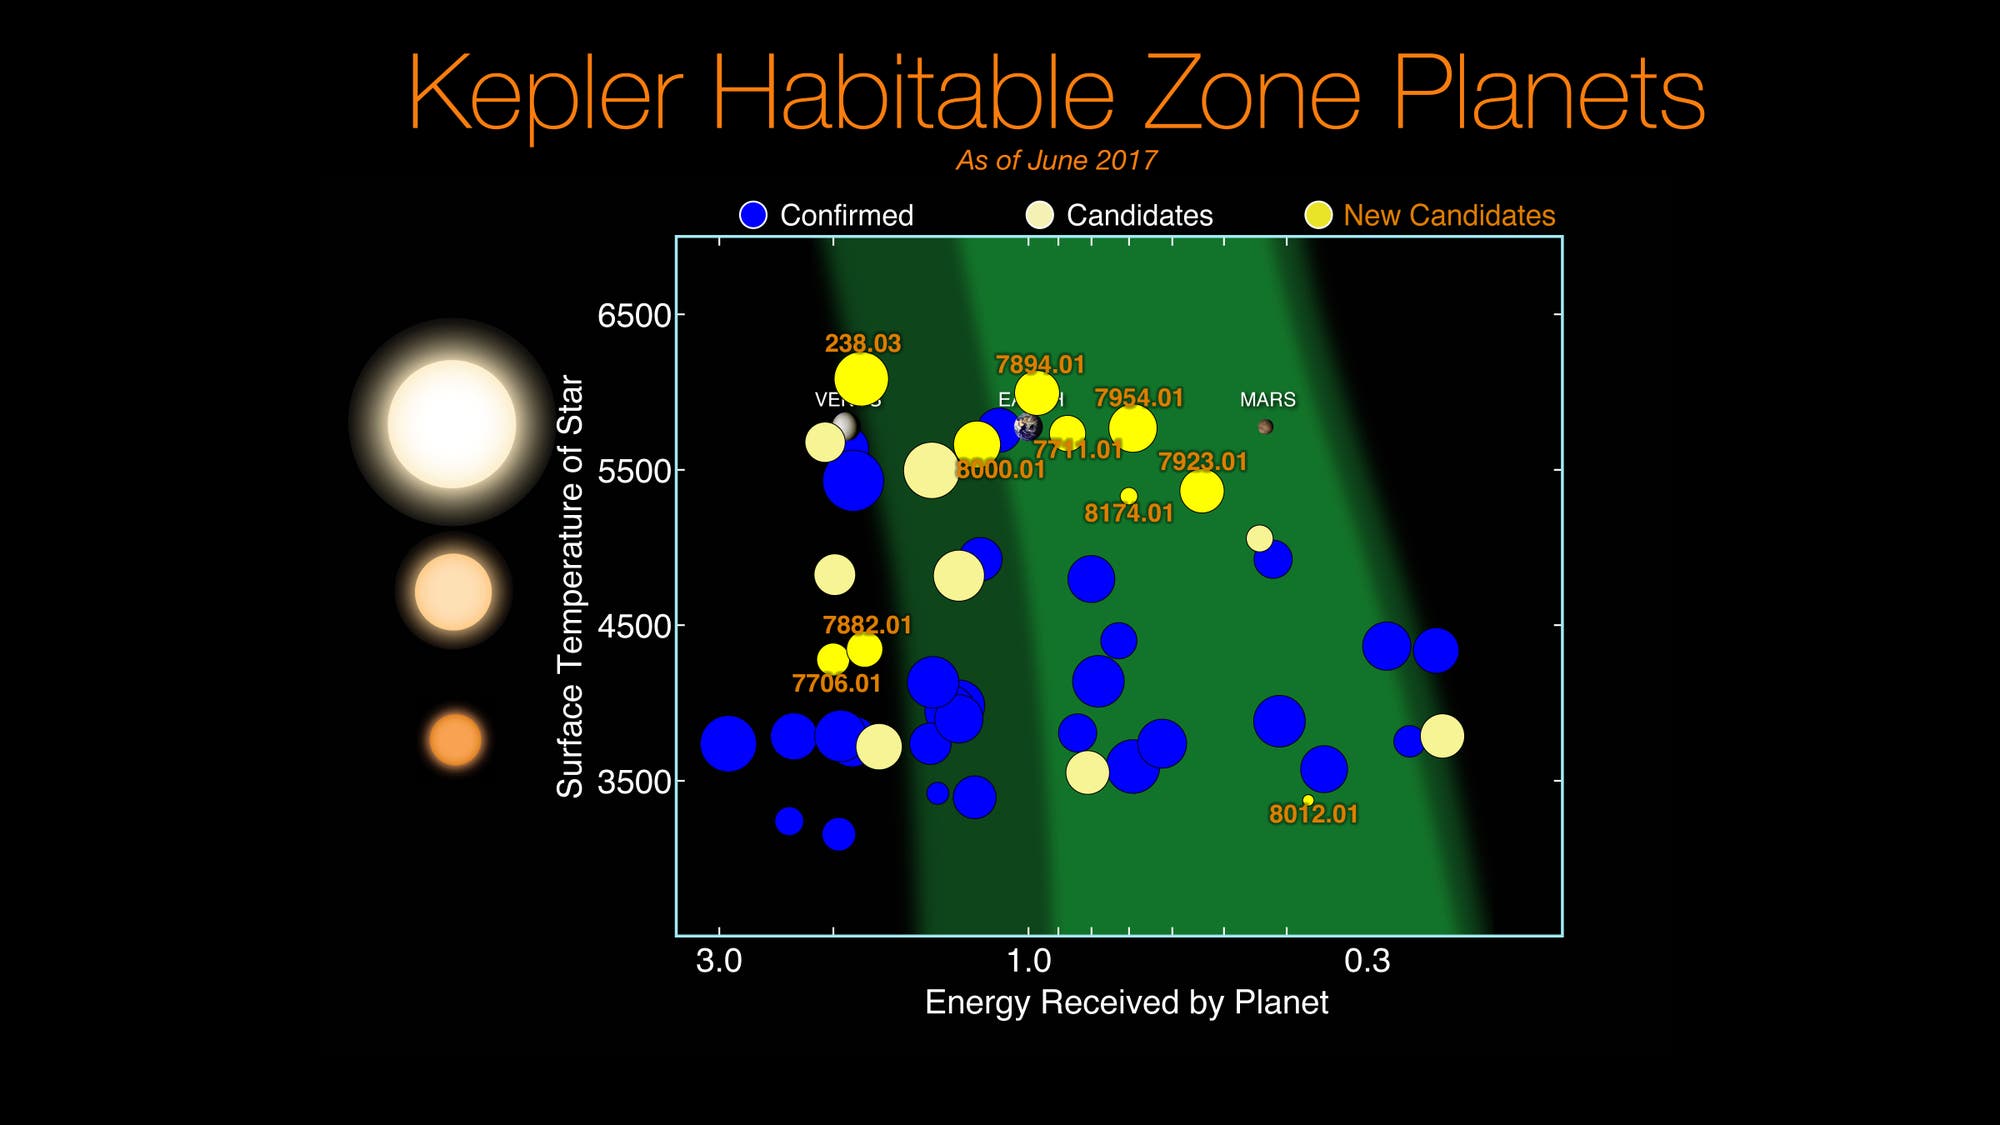 Kepler-Planeten in habitabler Zone